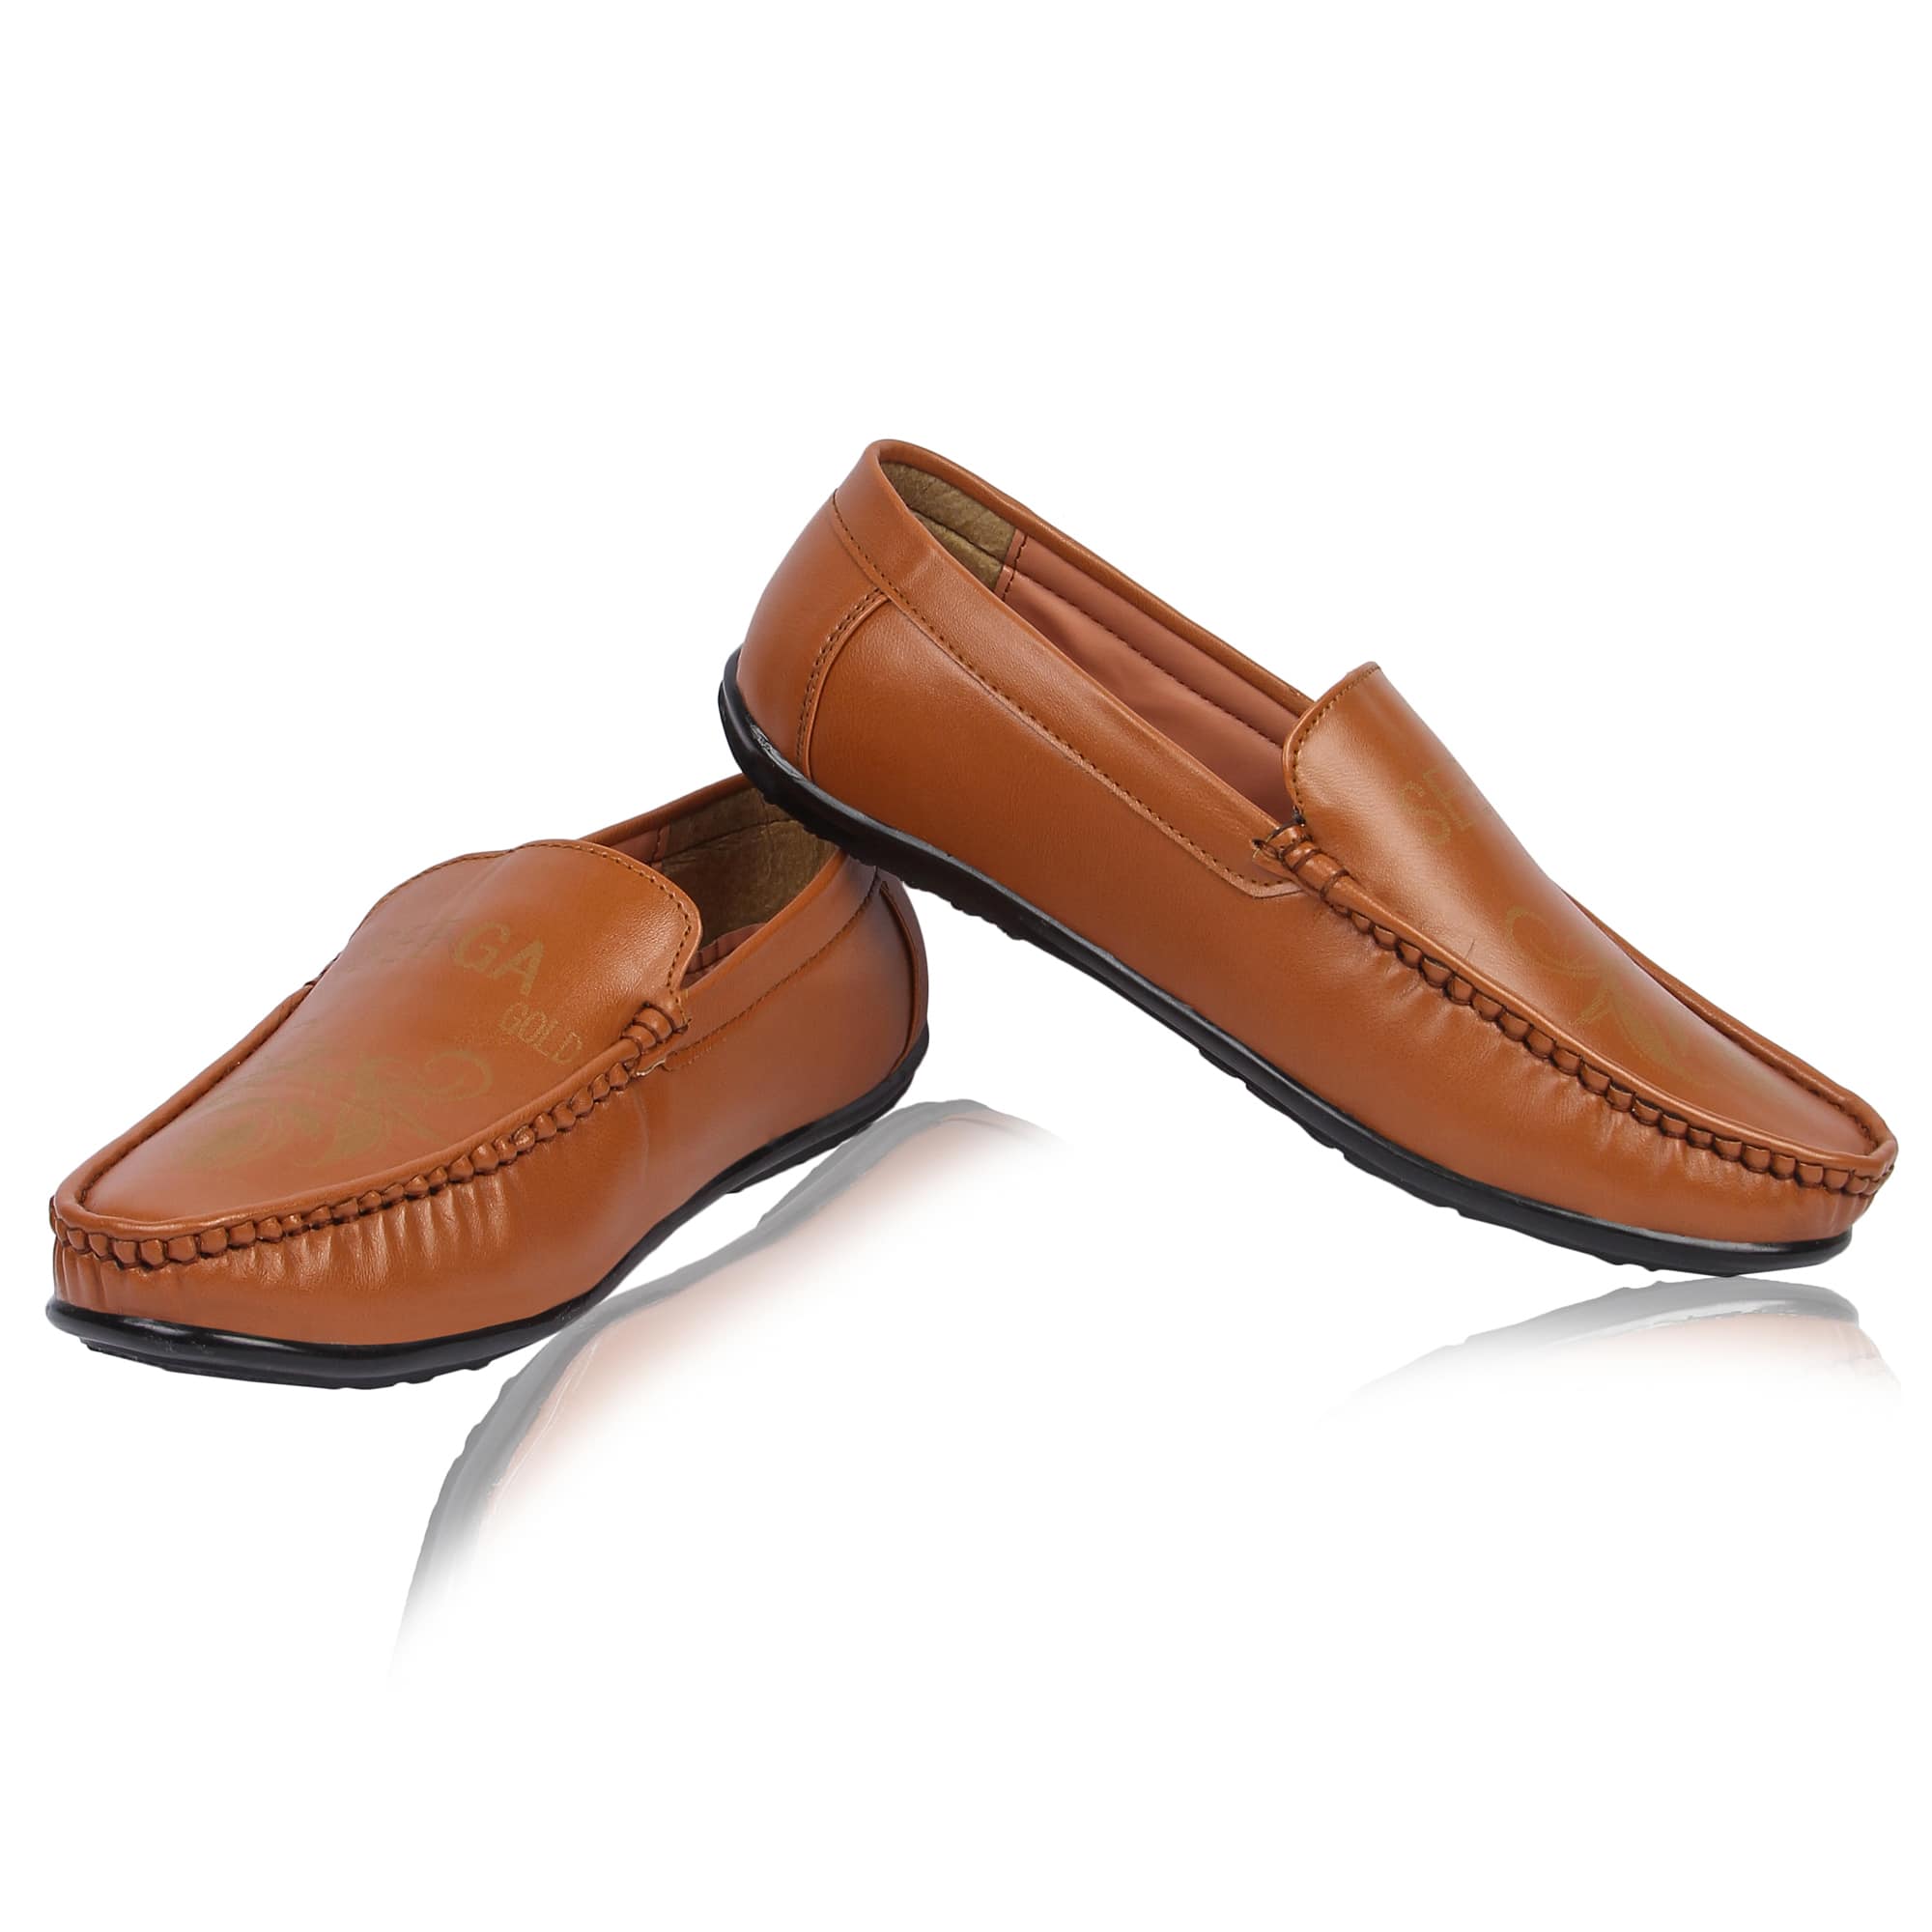 IMG_0082-min | Online Store for Men Footwear in India